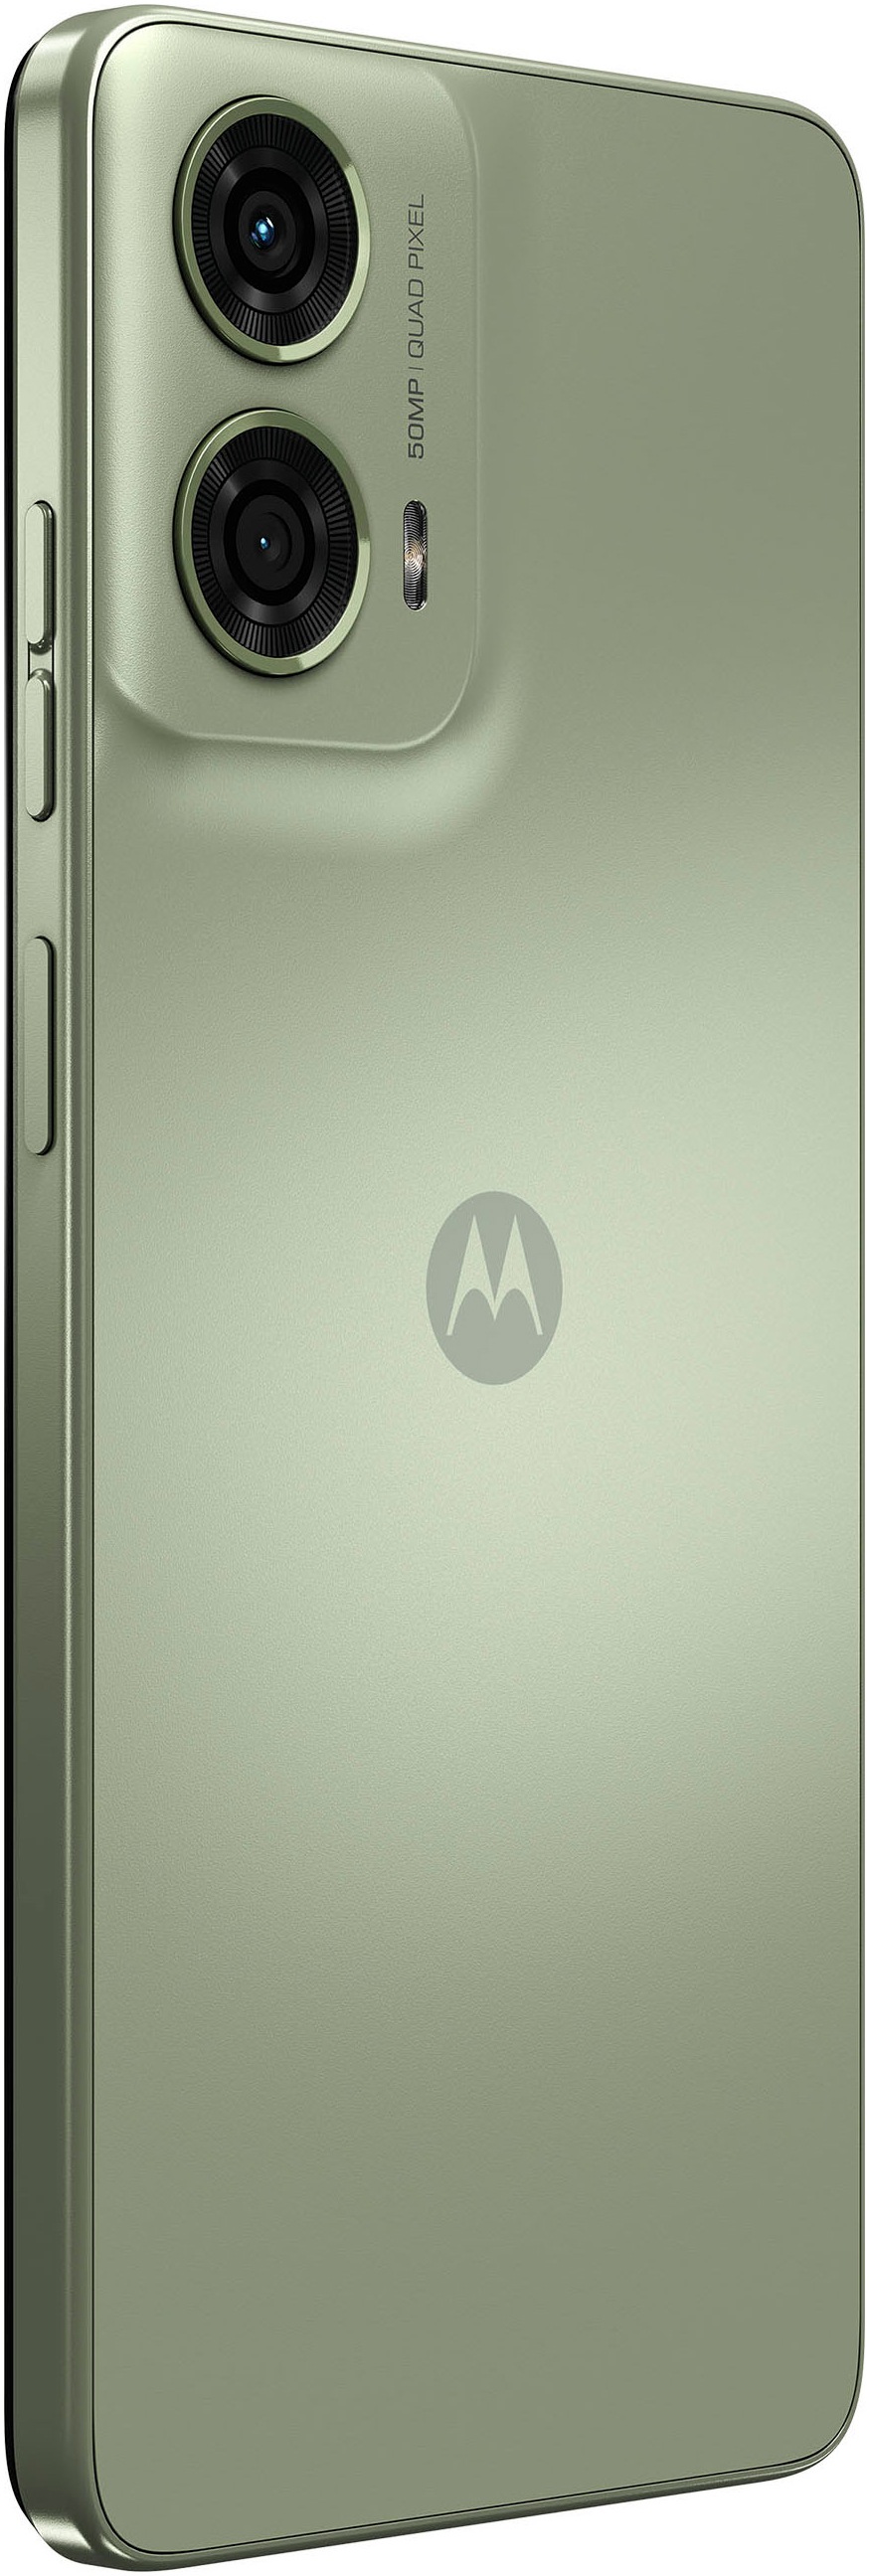 Motorola Smartphone »Moto G24«, Seafoam Green, 16,66 cm/6,56 Zoll, 128 GB Speicherplatz, 50 MP Kamera